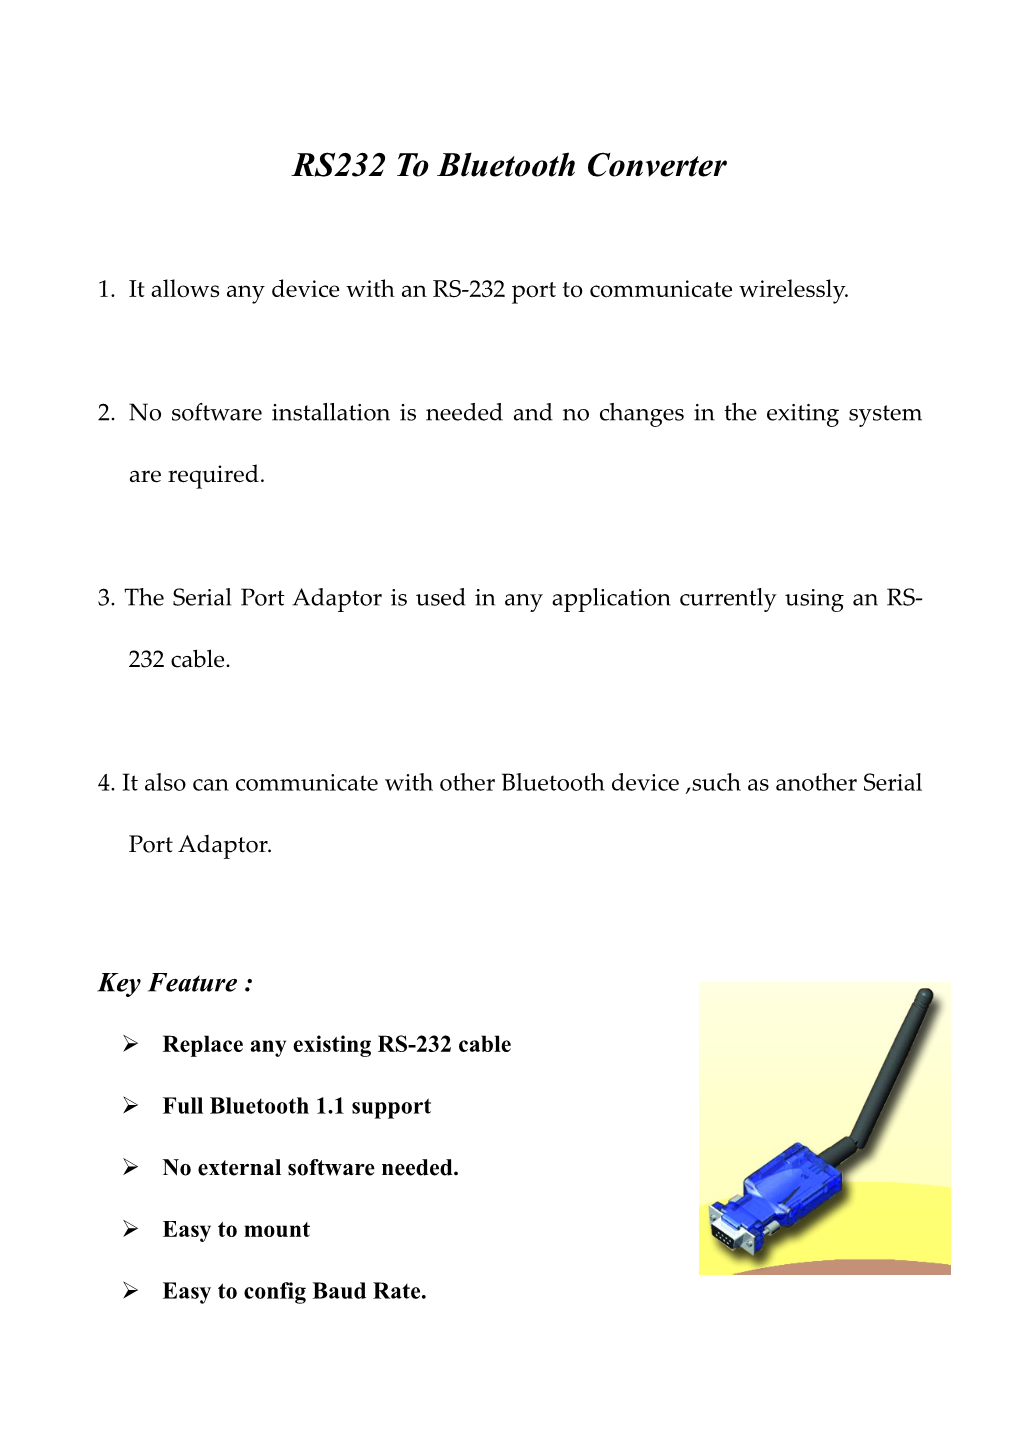 Bluetooth Serial Port Adaptor